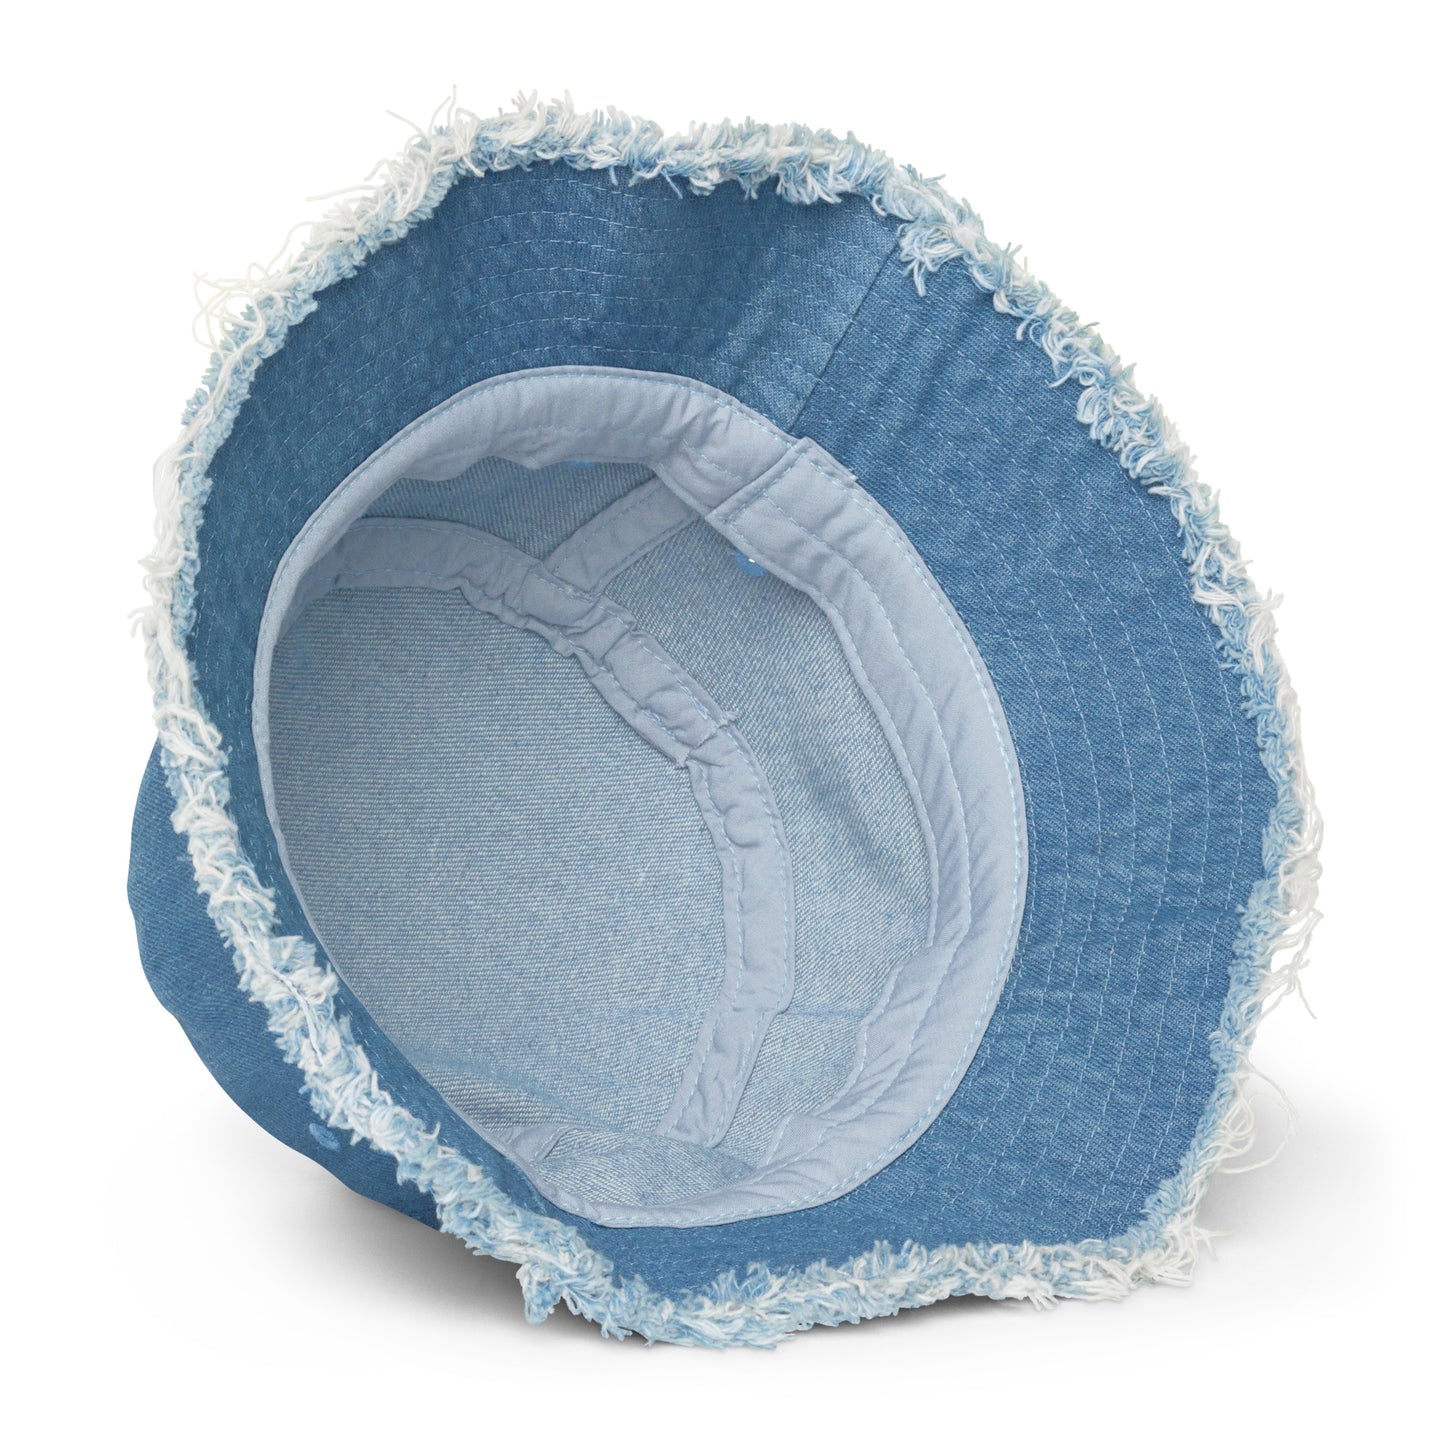 Y005 - Mũ xô denim rách (xanh)